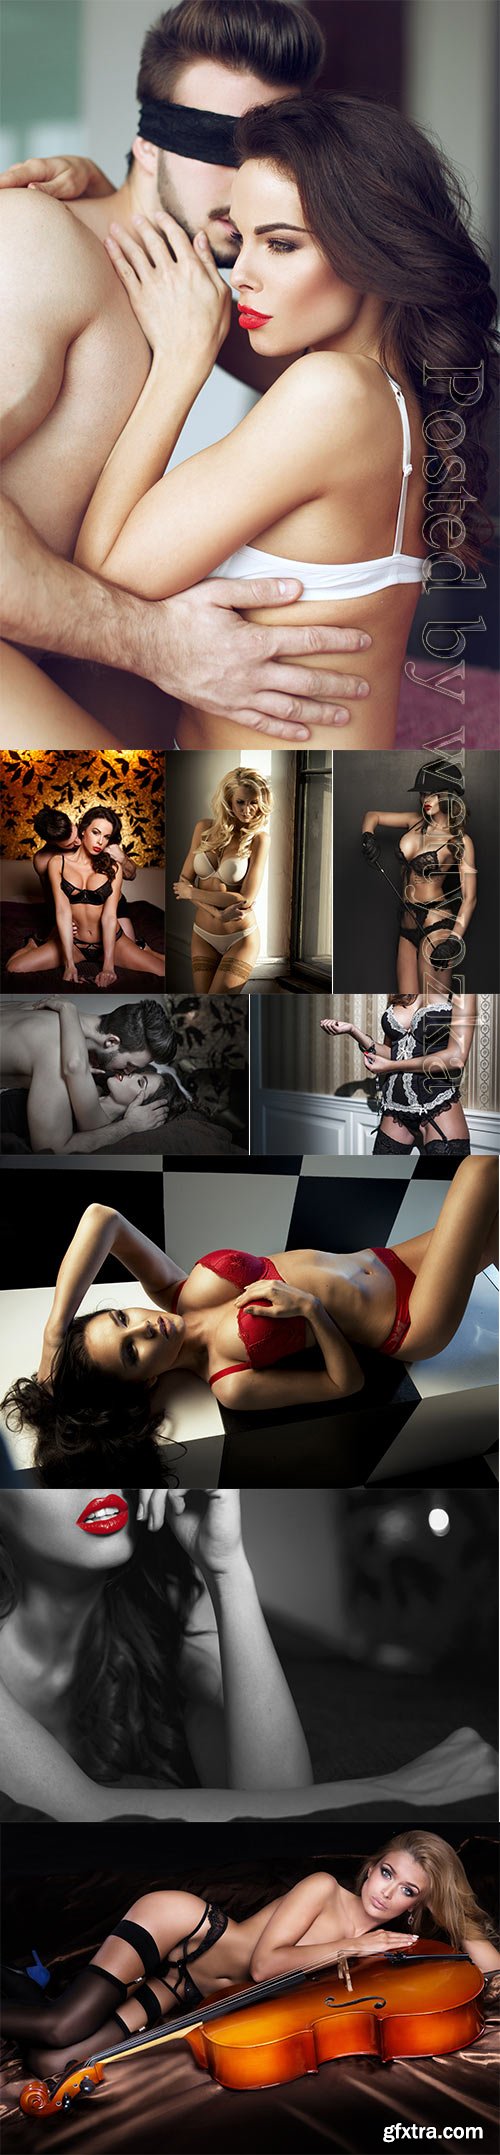 Luxury women in lingerie posing stock photo vol 16